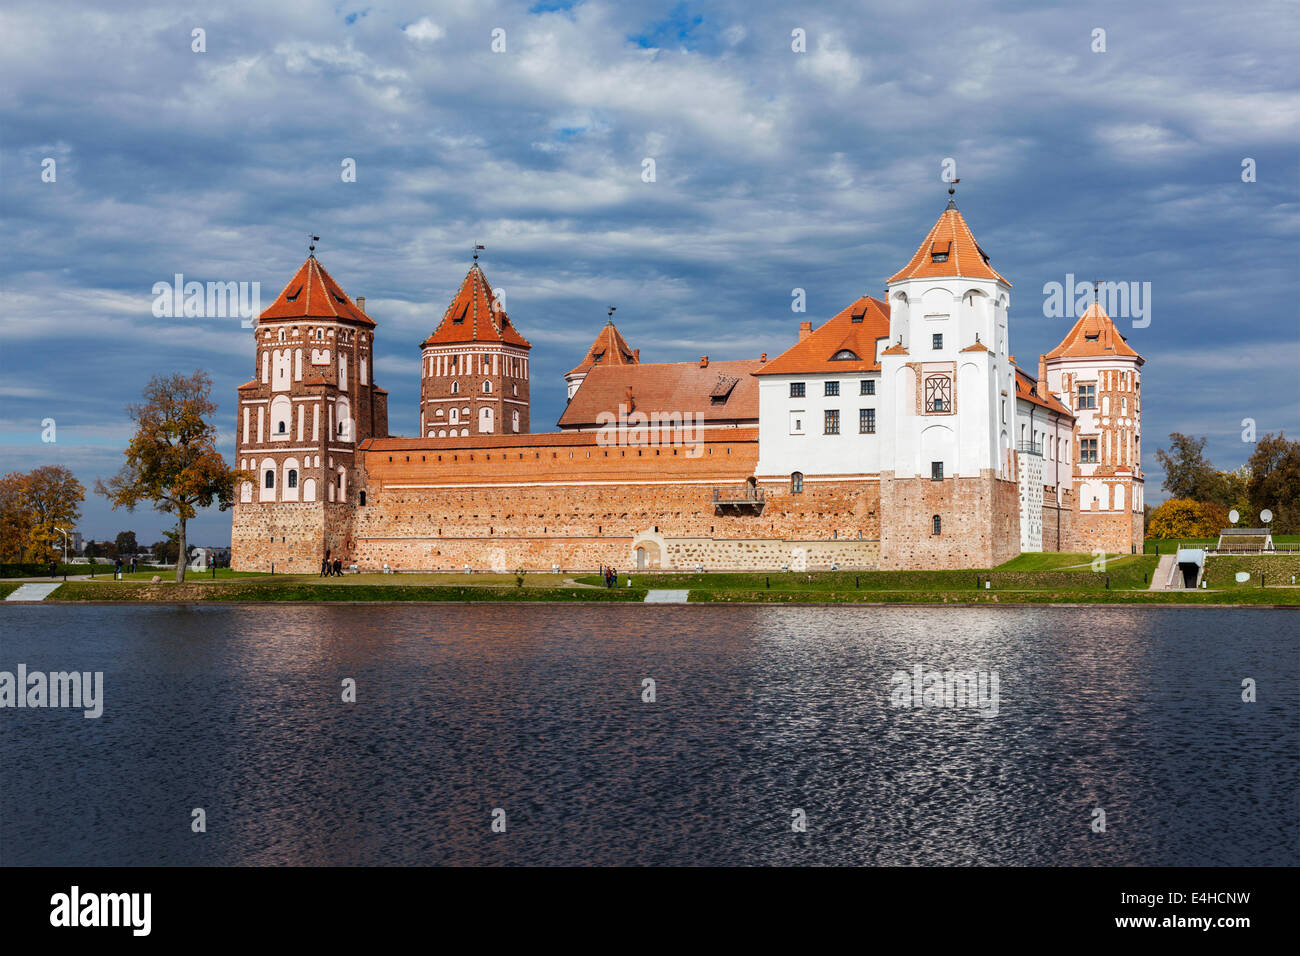 Travel belarus background - Medieval Mir castle famous landmark in town Mir, Belarus reflecting in lake Stock Photo